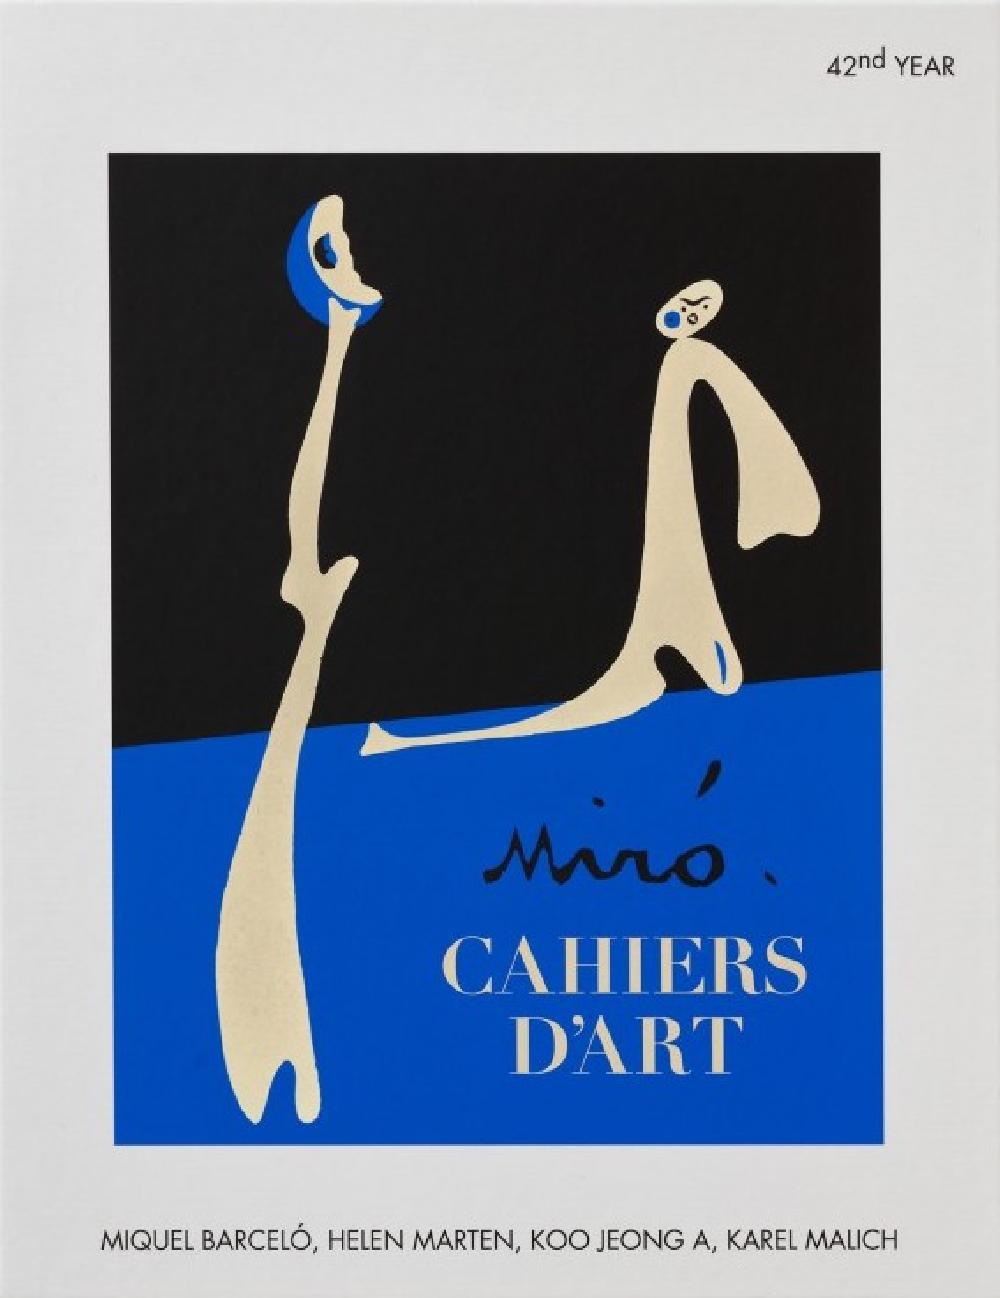 Revue Cahiers d'Art - Joan Miró 